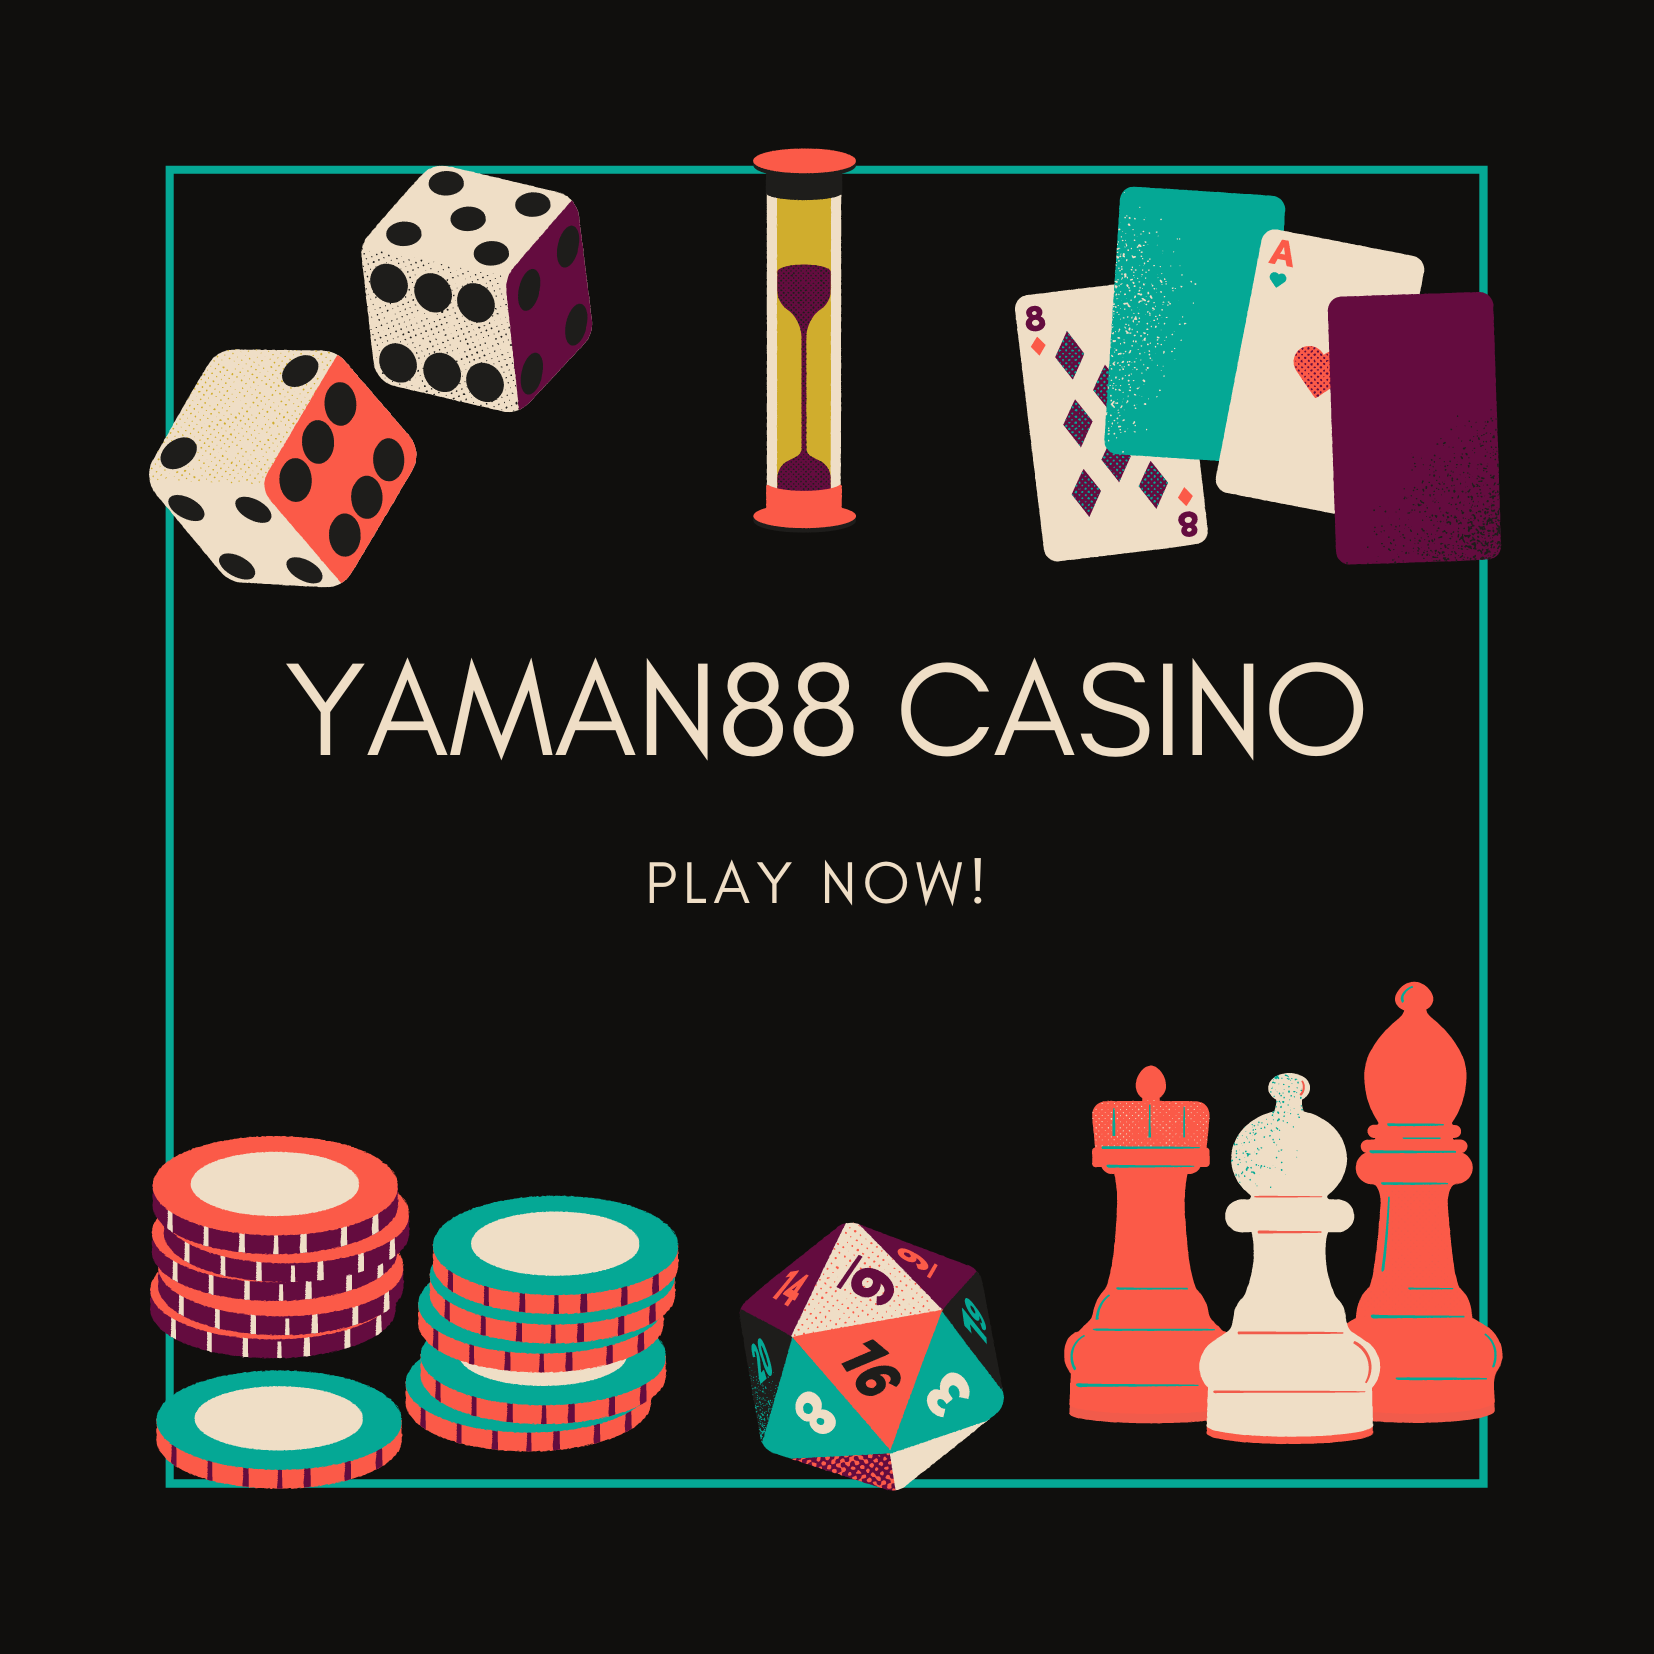 Yaman88 Casino